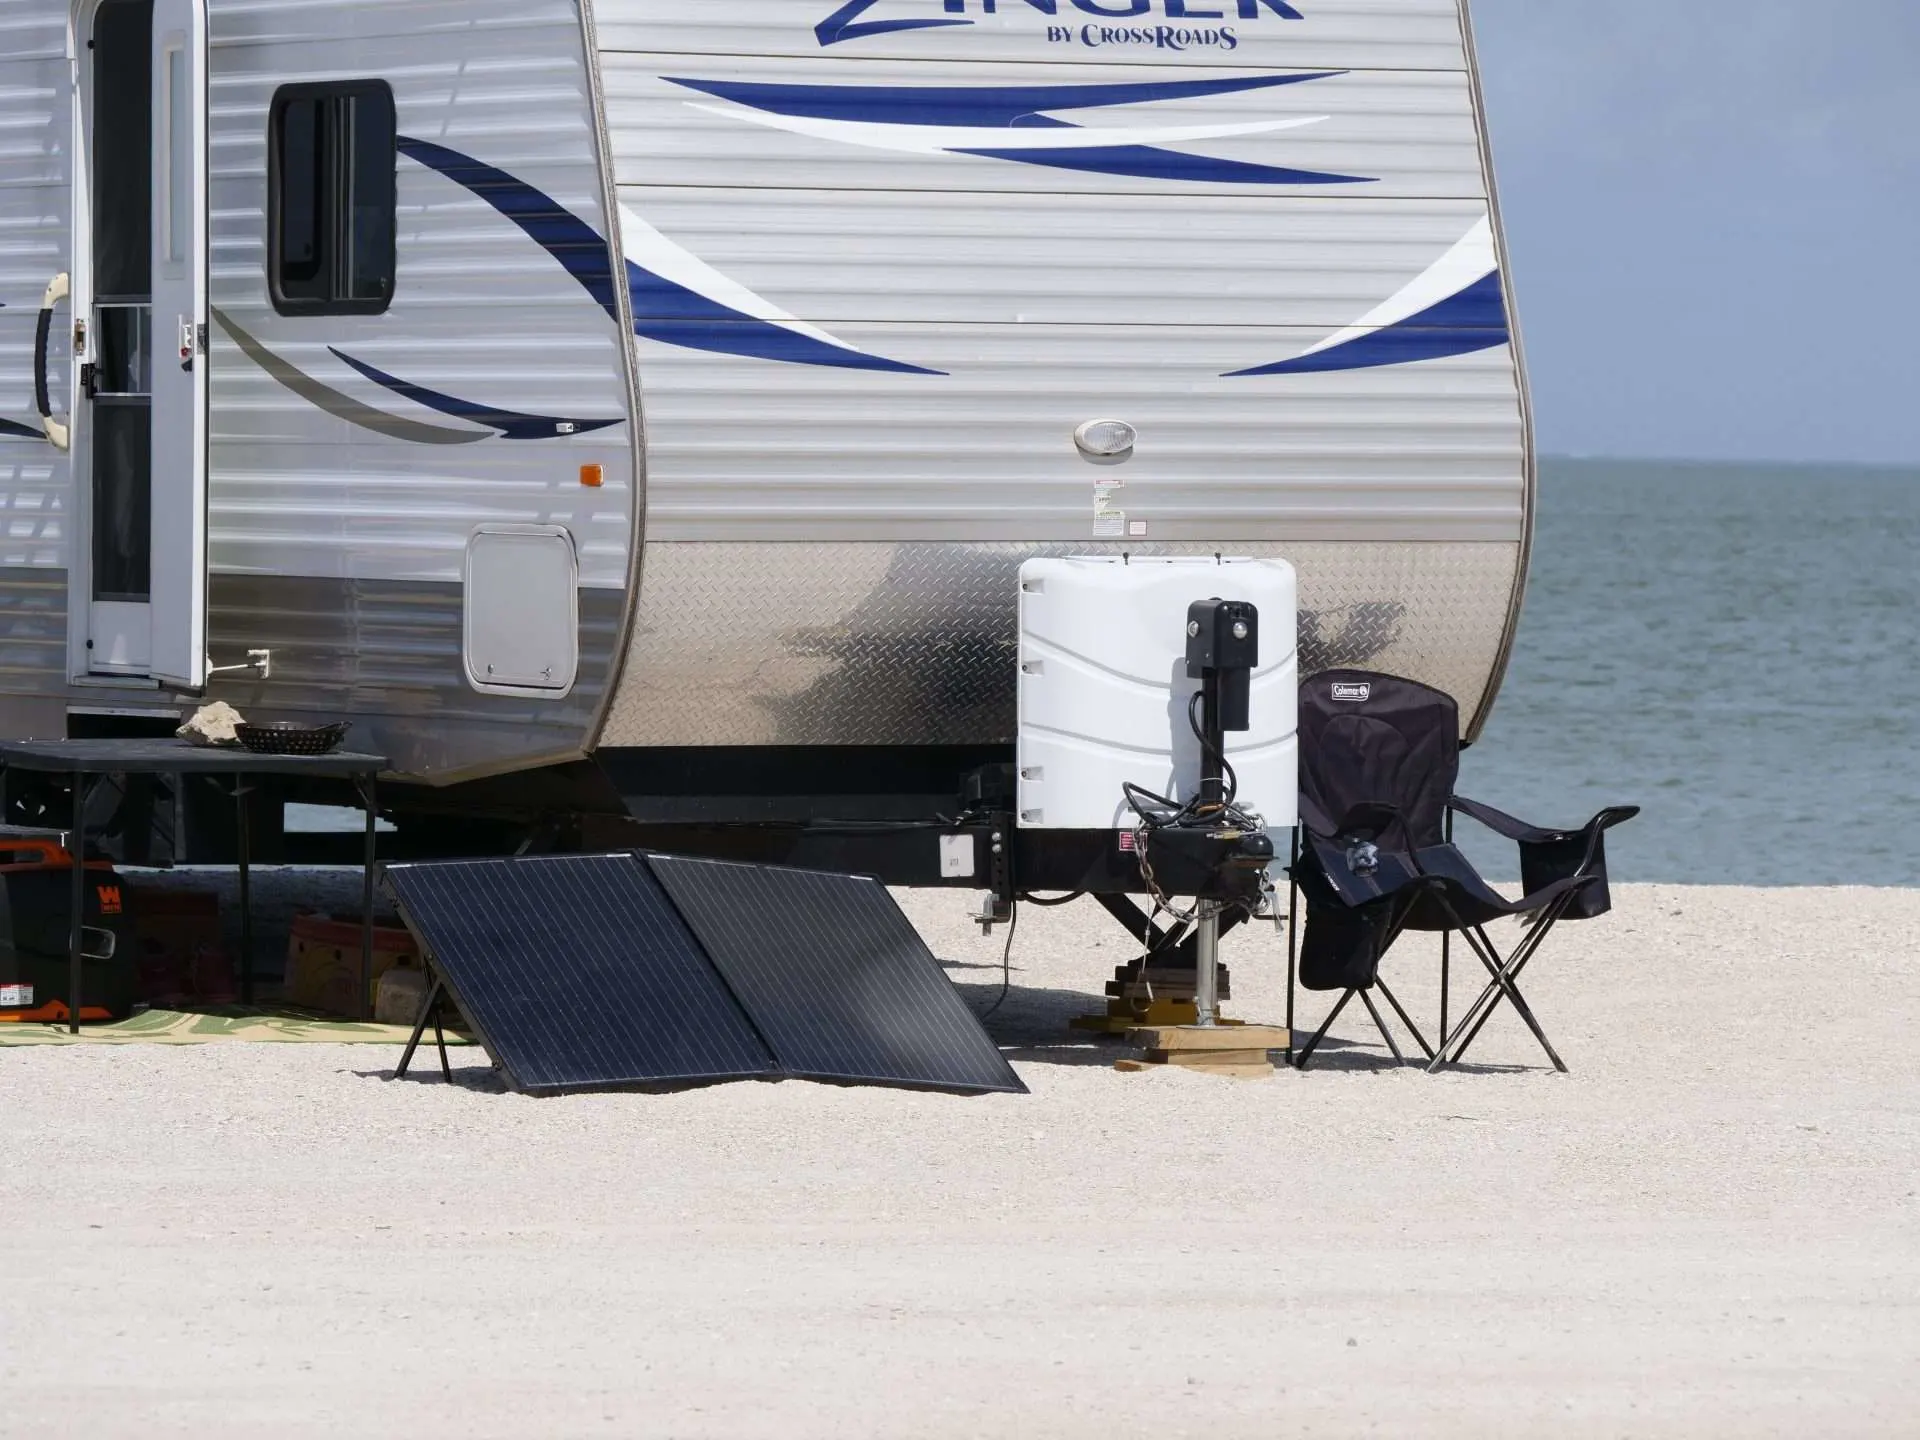 portable solar panels next to RV on beach